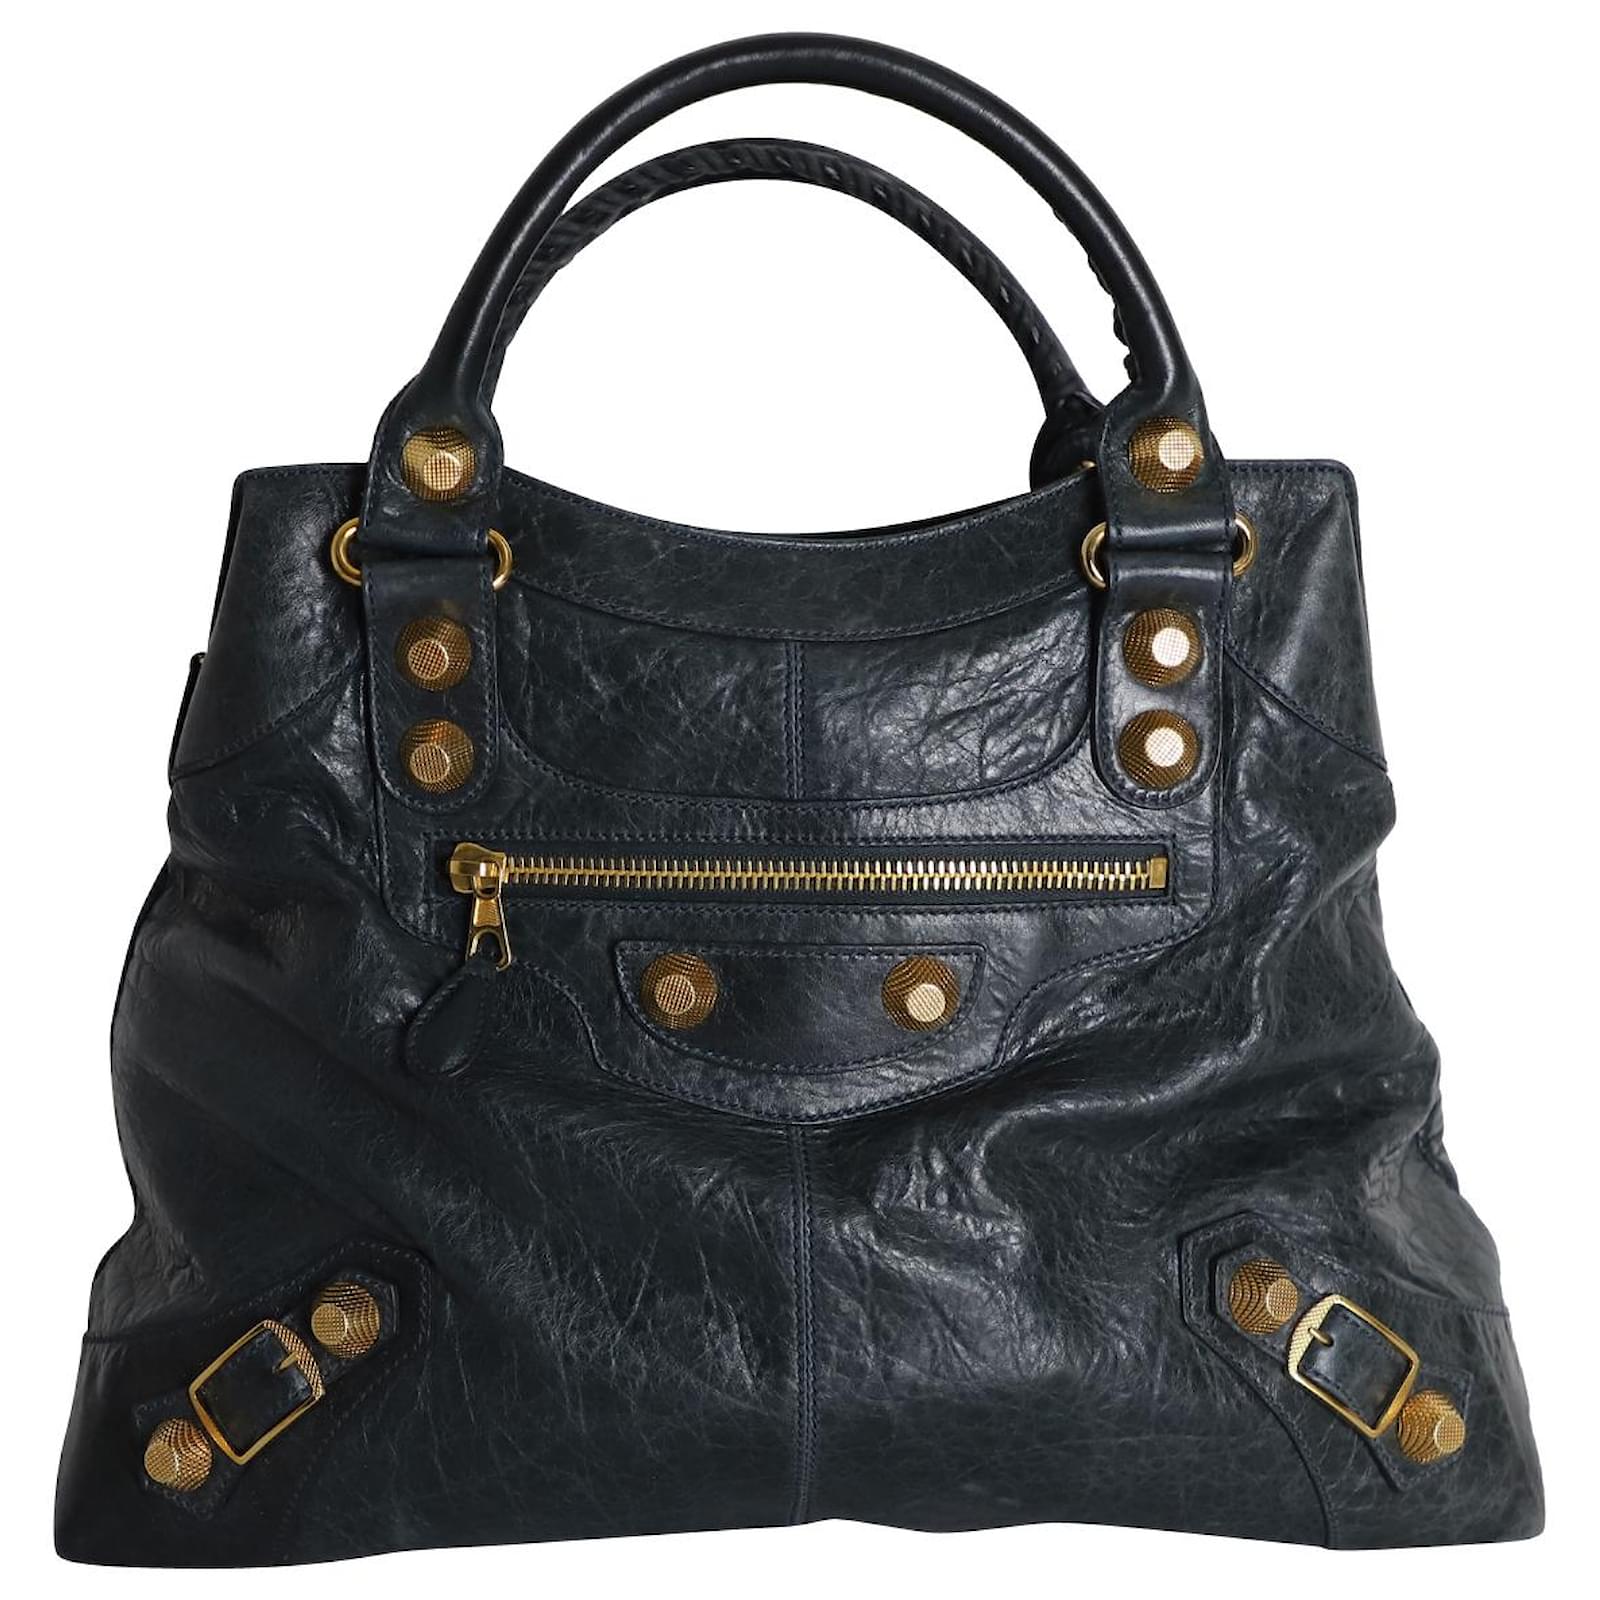 balenciaga velo handbag in dark grey leather totes